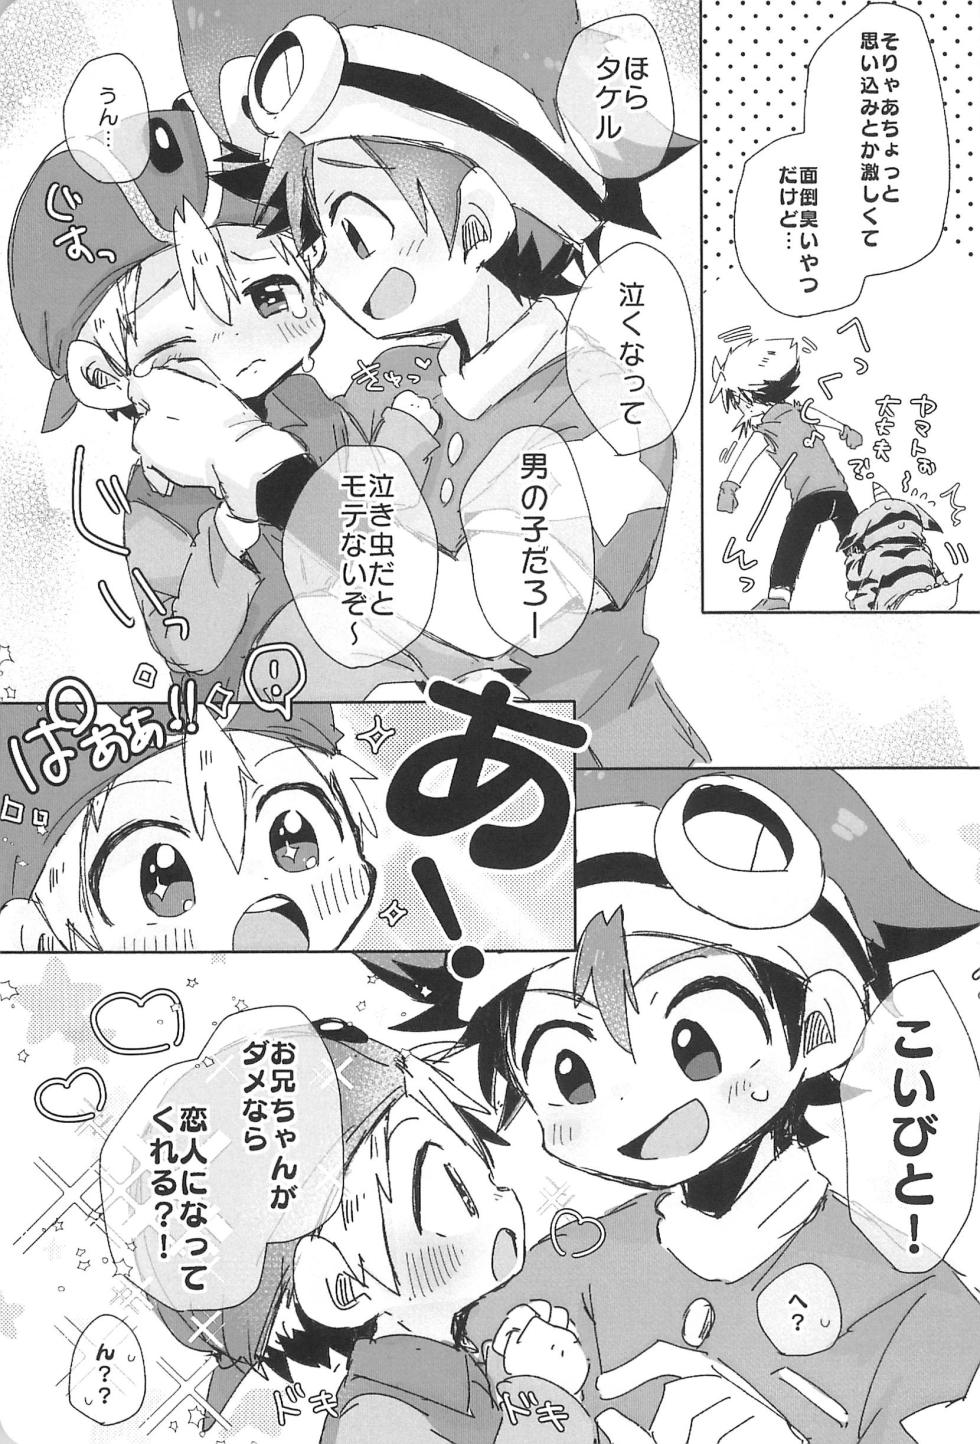 [＠szkn (Suzuki Sukyana)] Re:Re: (Digimon Adventure) - Page 33